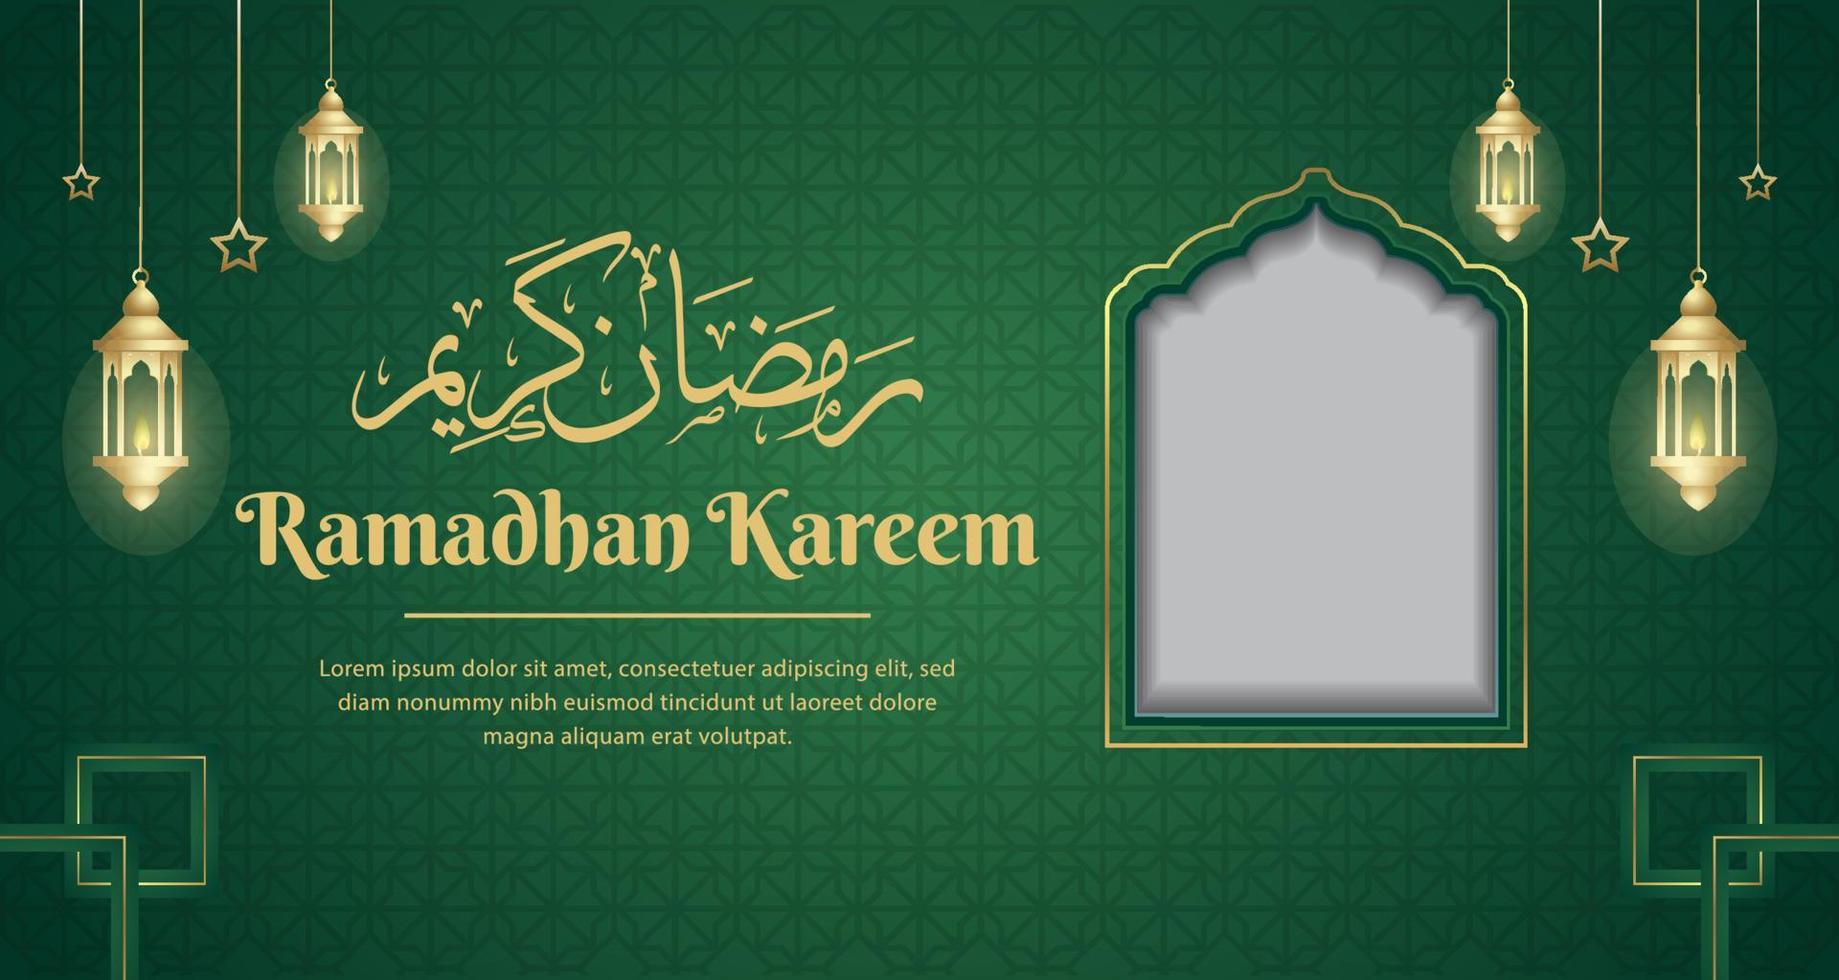 Ramadan Kareem Gruß Hintergrundvorlage vektor